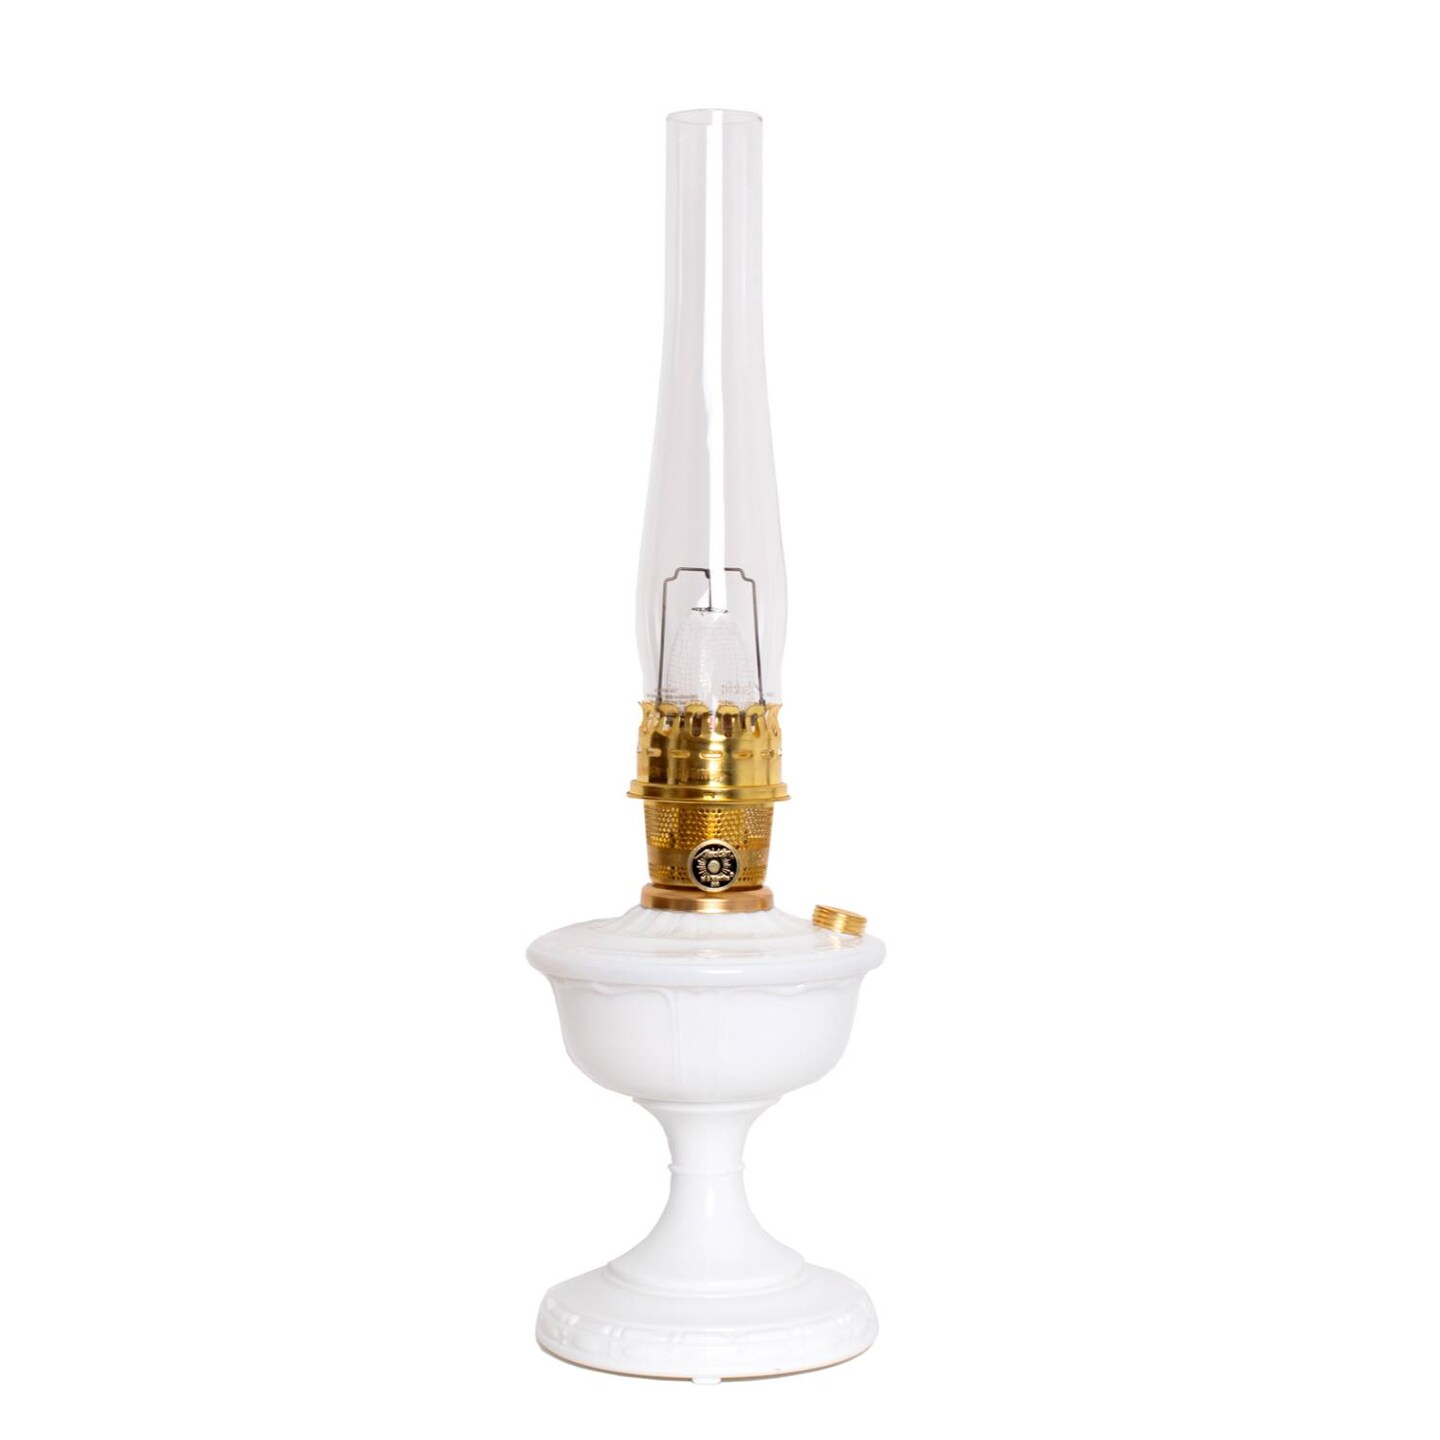 Aladdin Milk Glass Oil Lamp, Alexandria Model with Aladdin Burner, Wick, Glass chimney and Mantle